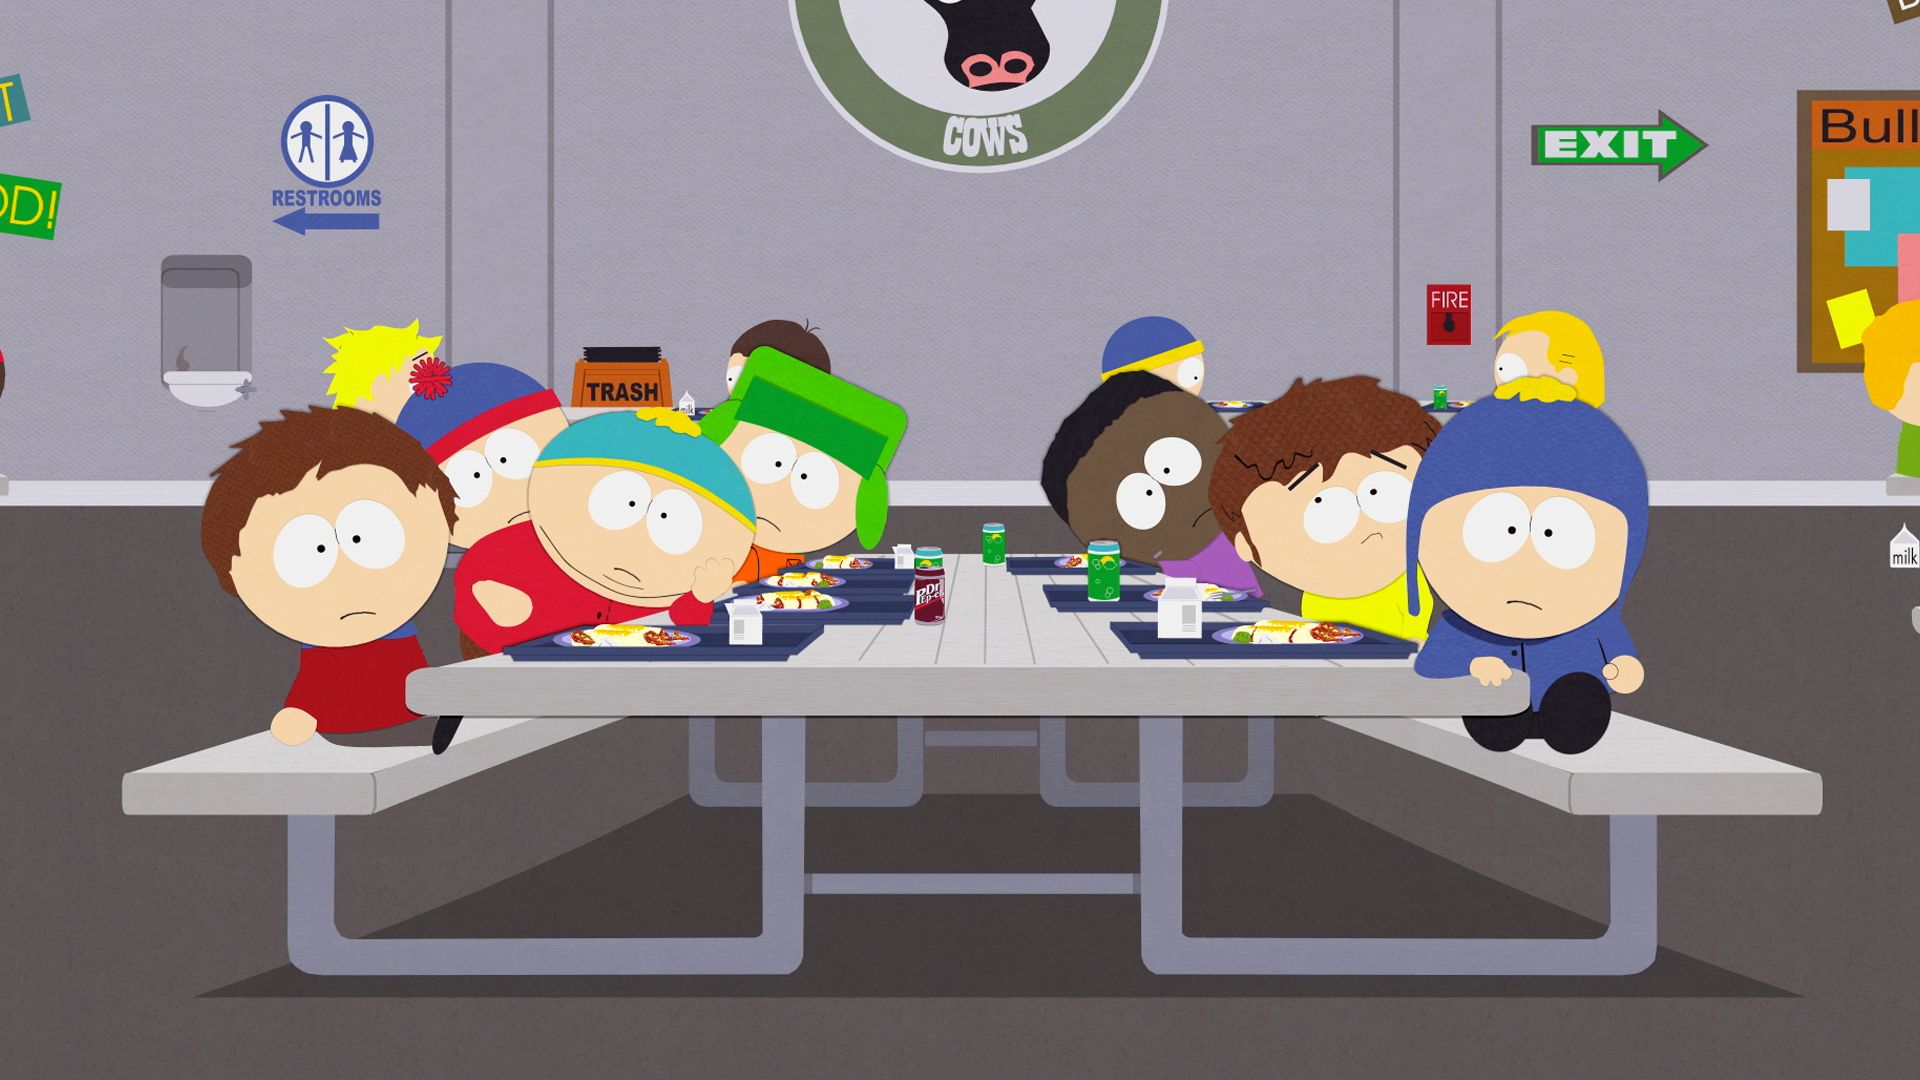 Hey Jimmy, What's a B.J.? - Season 13 Episode 1 - South Park